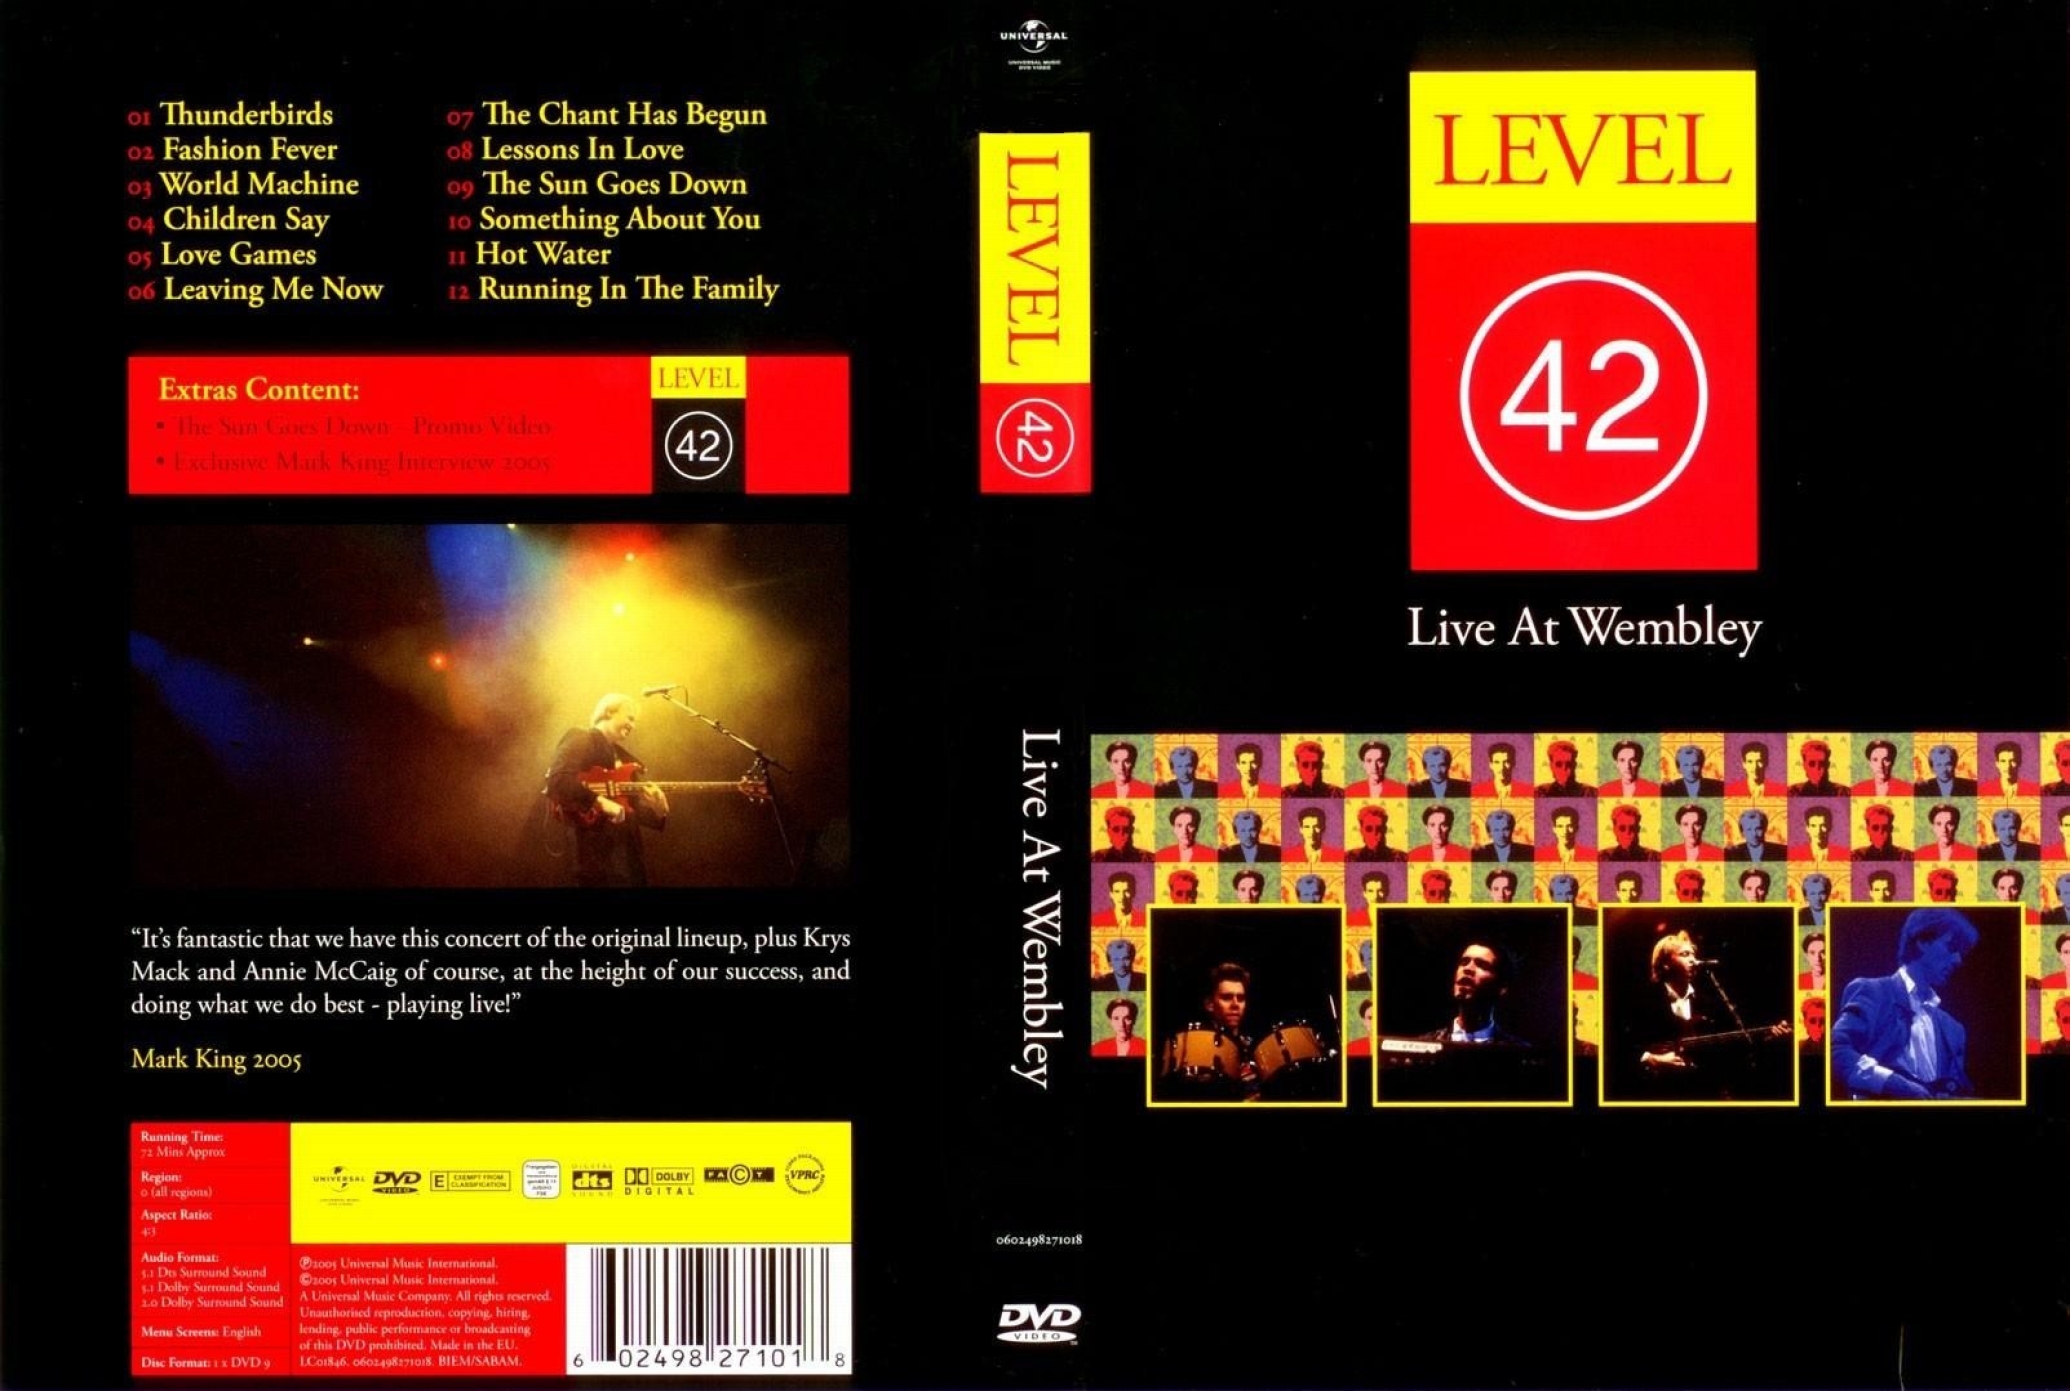 Jaquette DVD Level 42 Live at Wembley custom